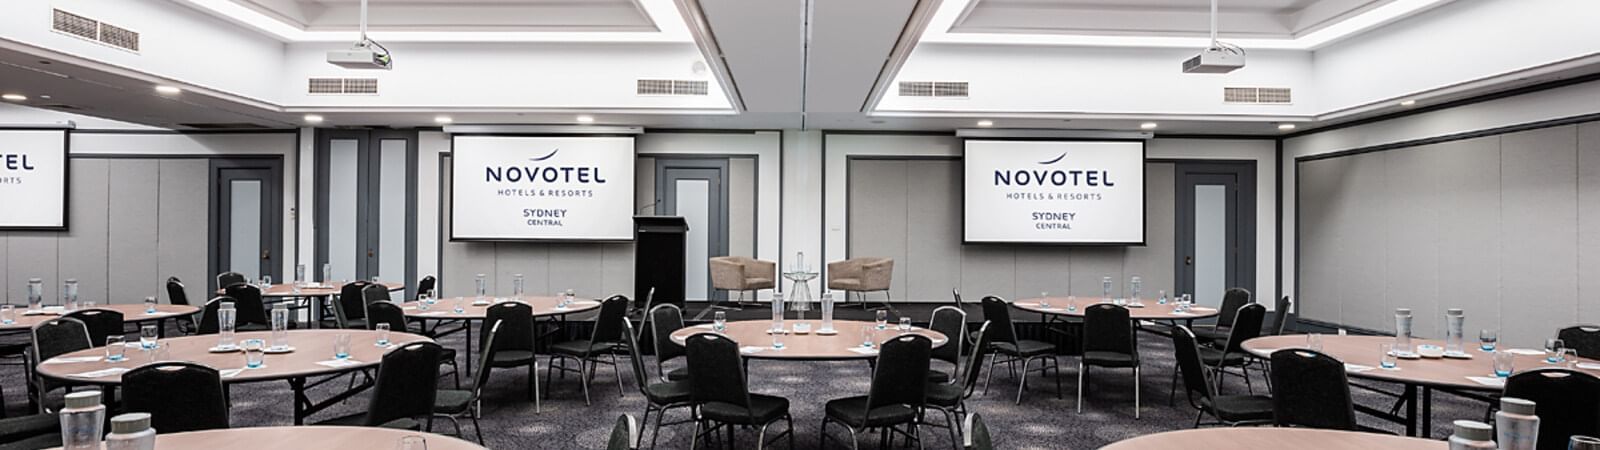 Events at Novotel Sydney Central